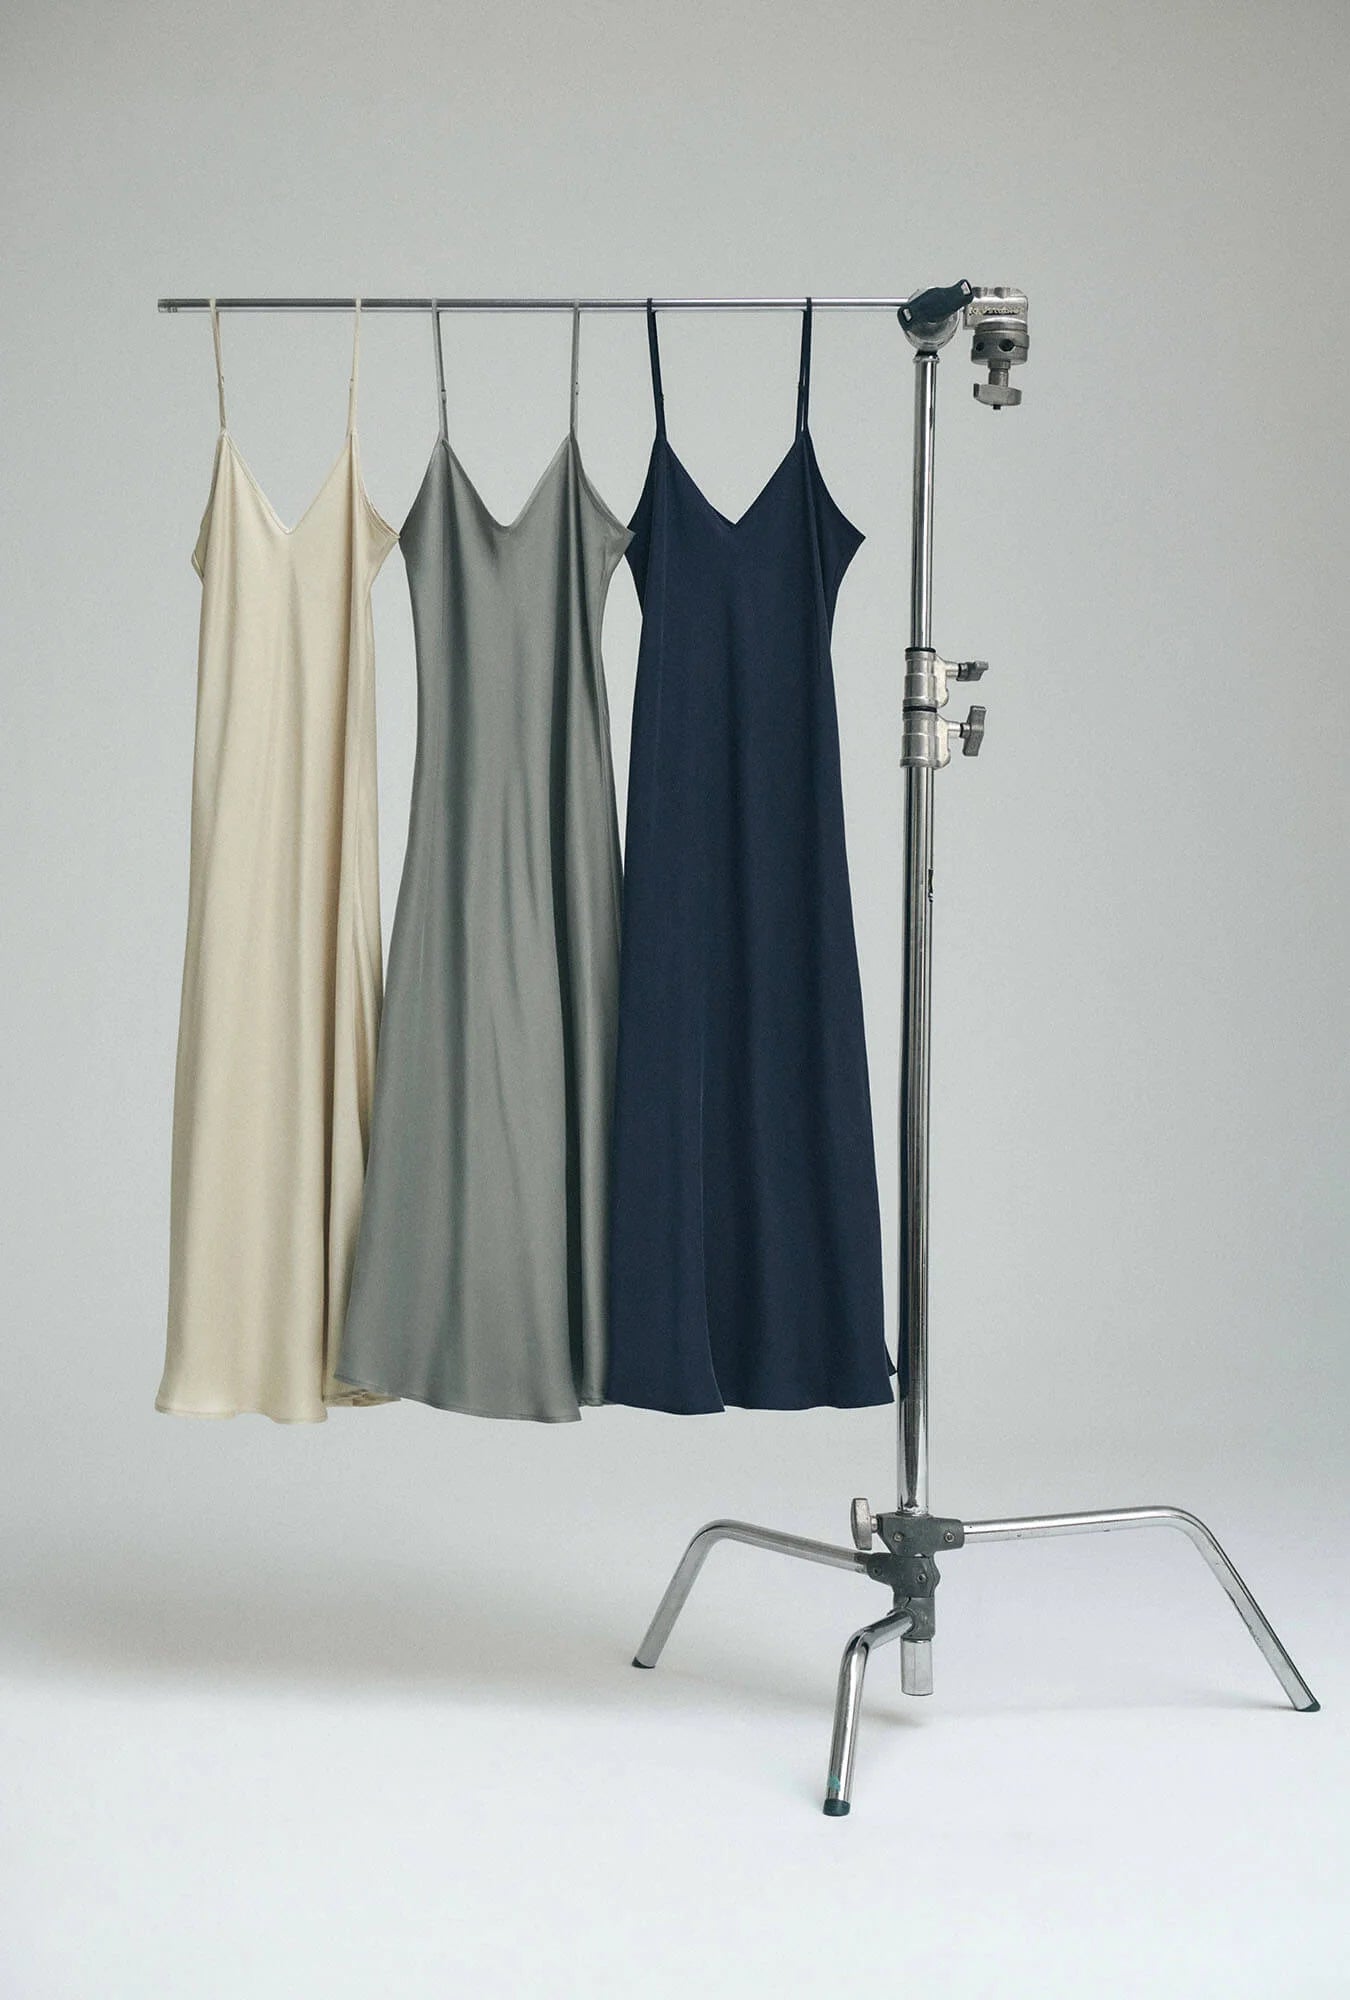 3 silk laundry slip dresses on a rack